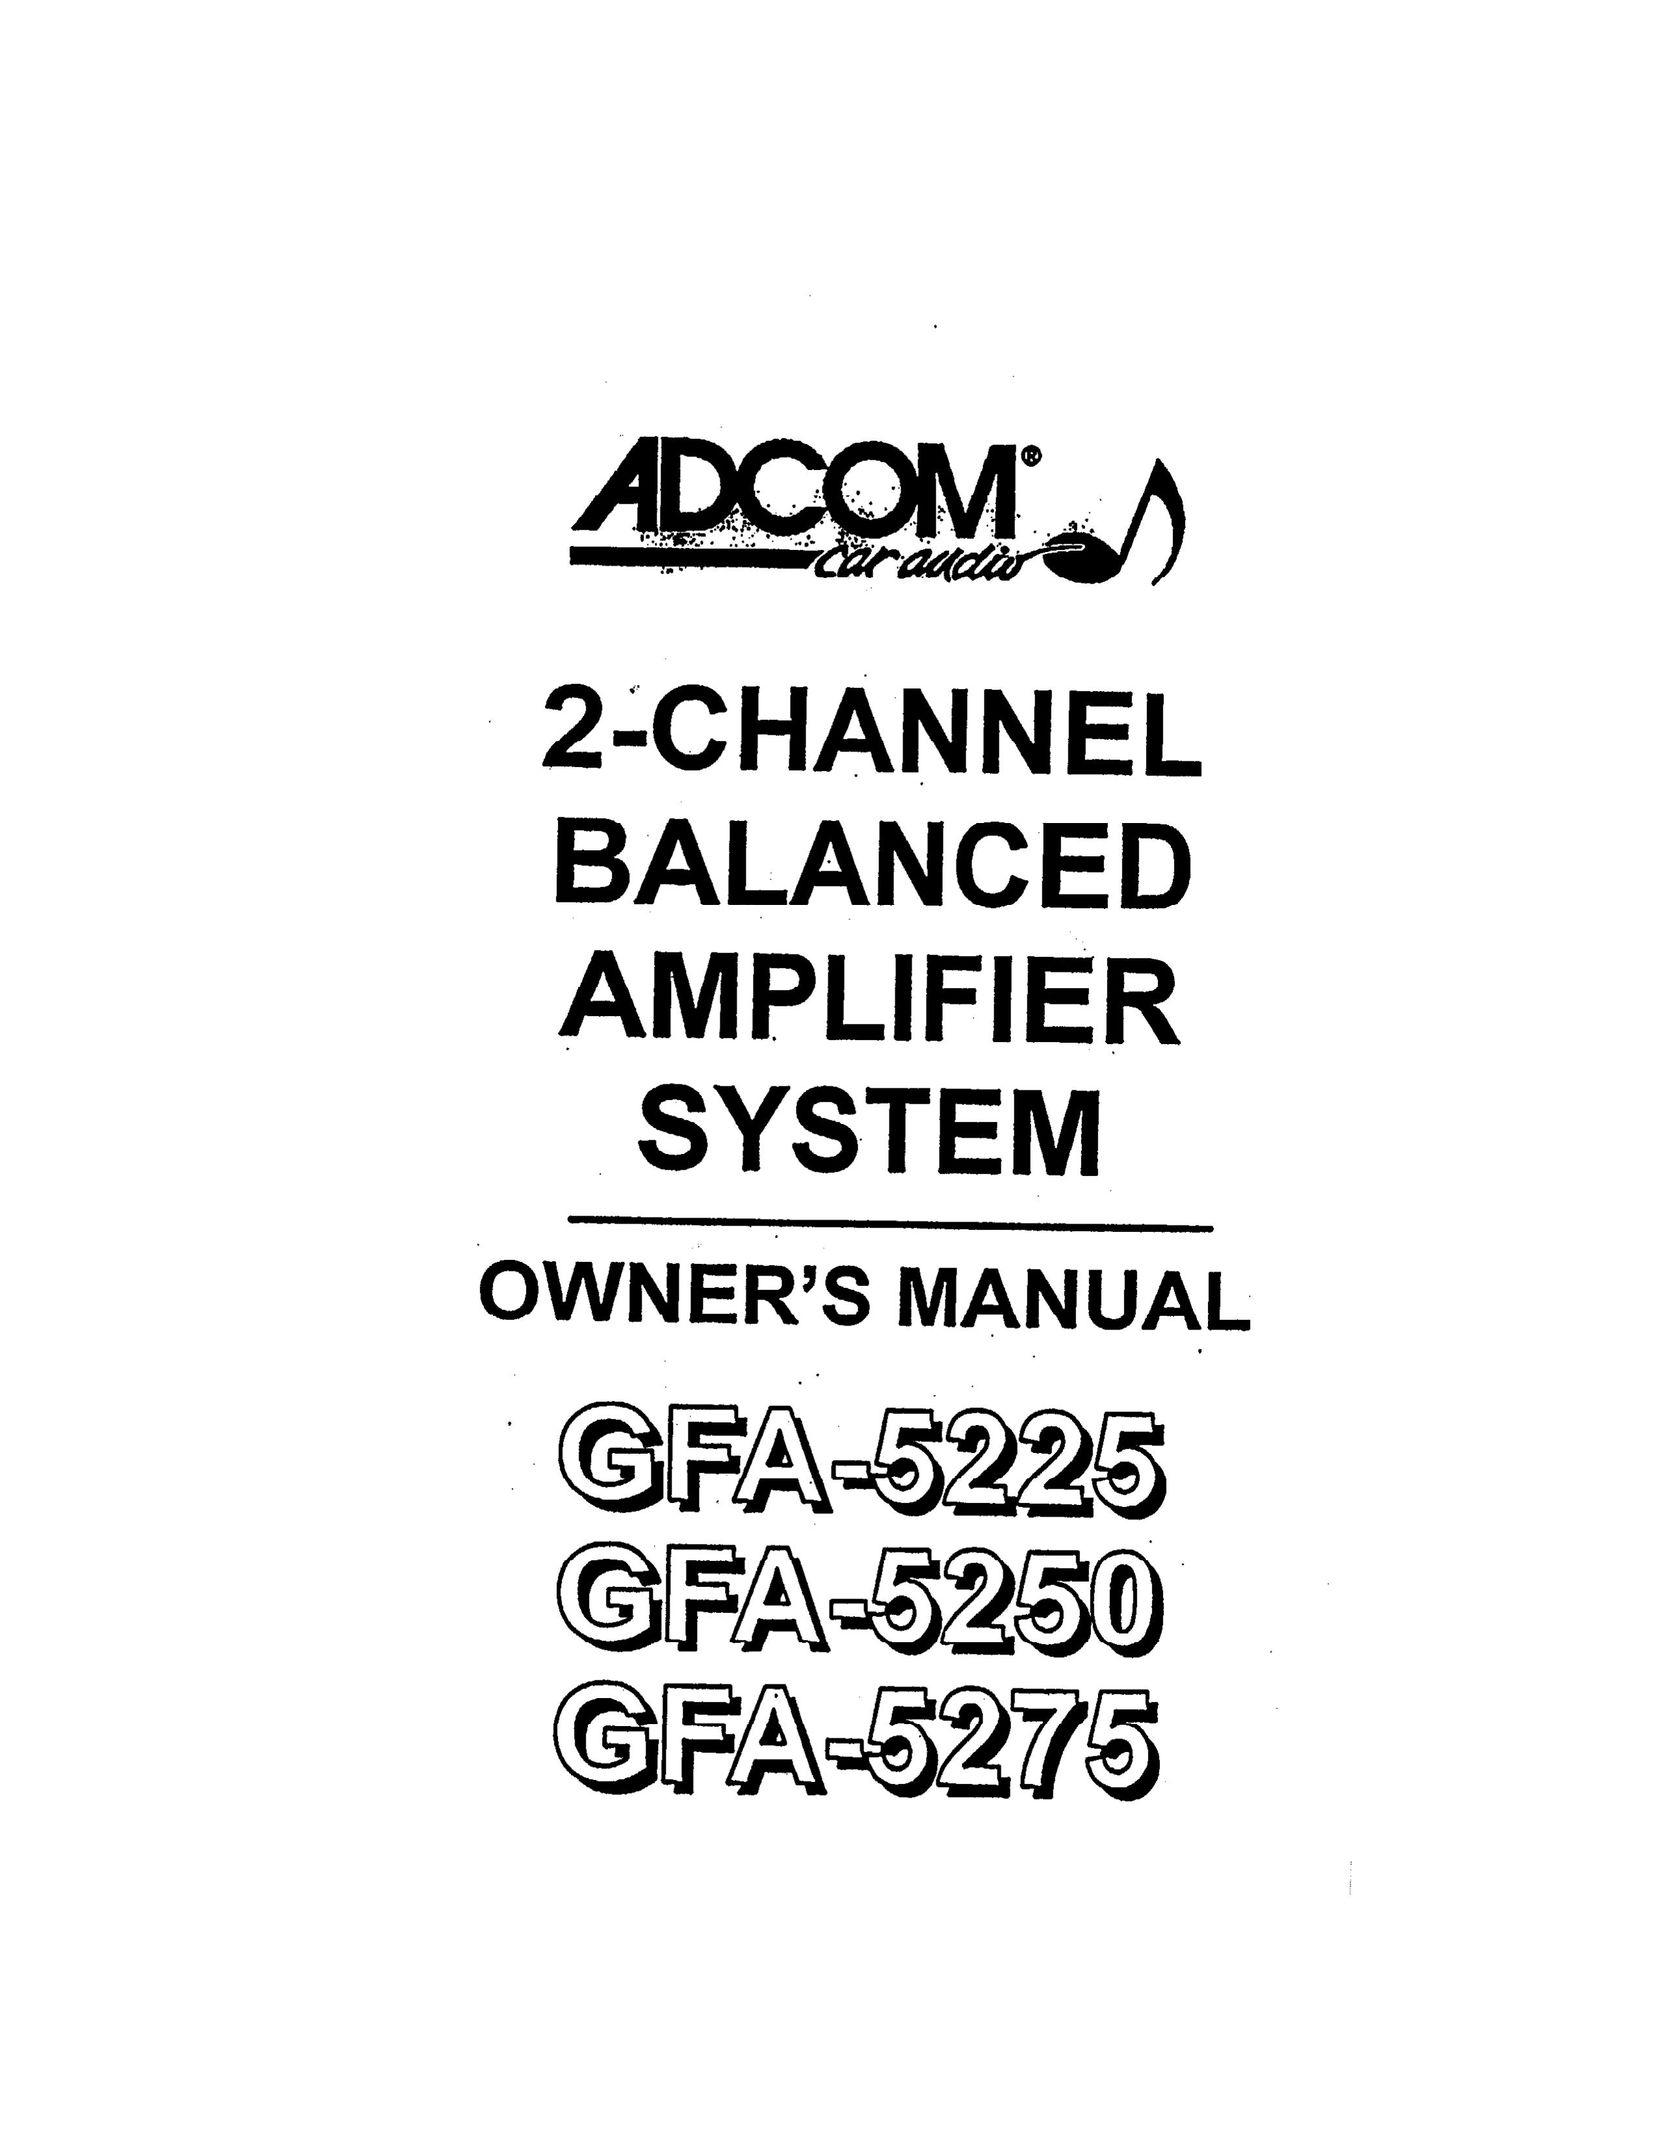 Adcom GFA-5275 Car Amplifier User Manual (Page 1)